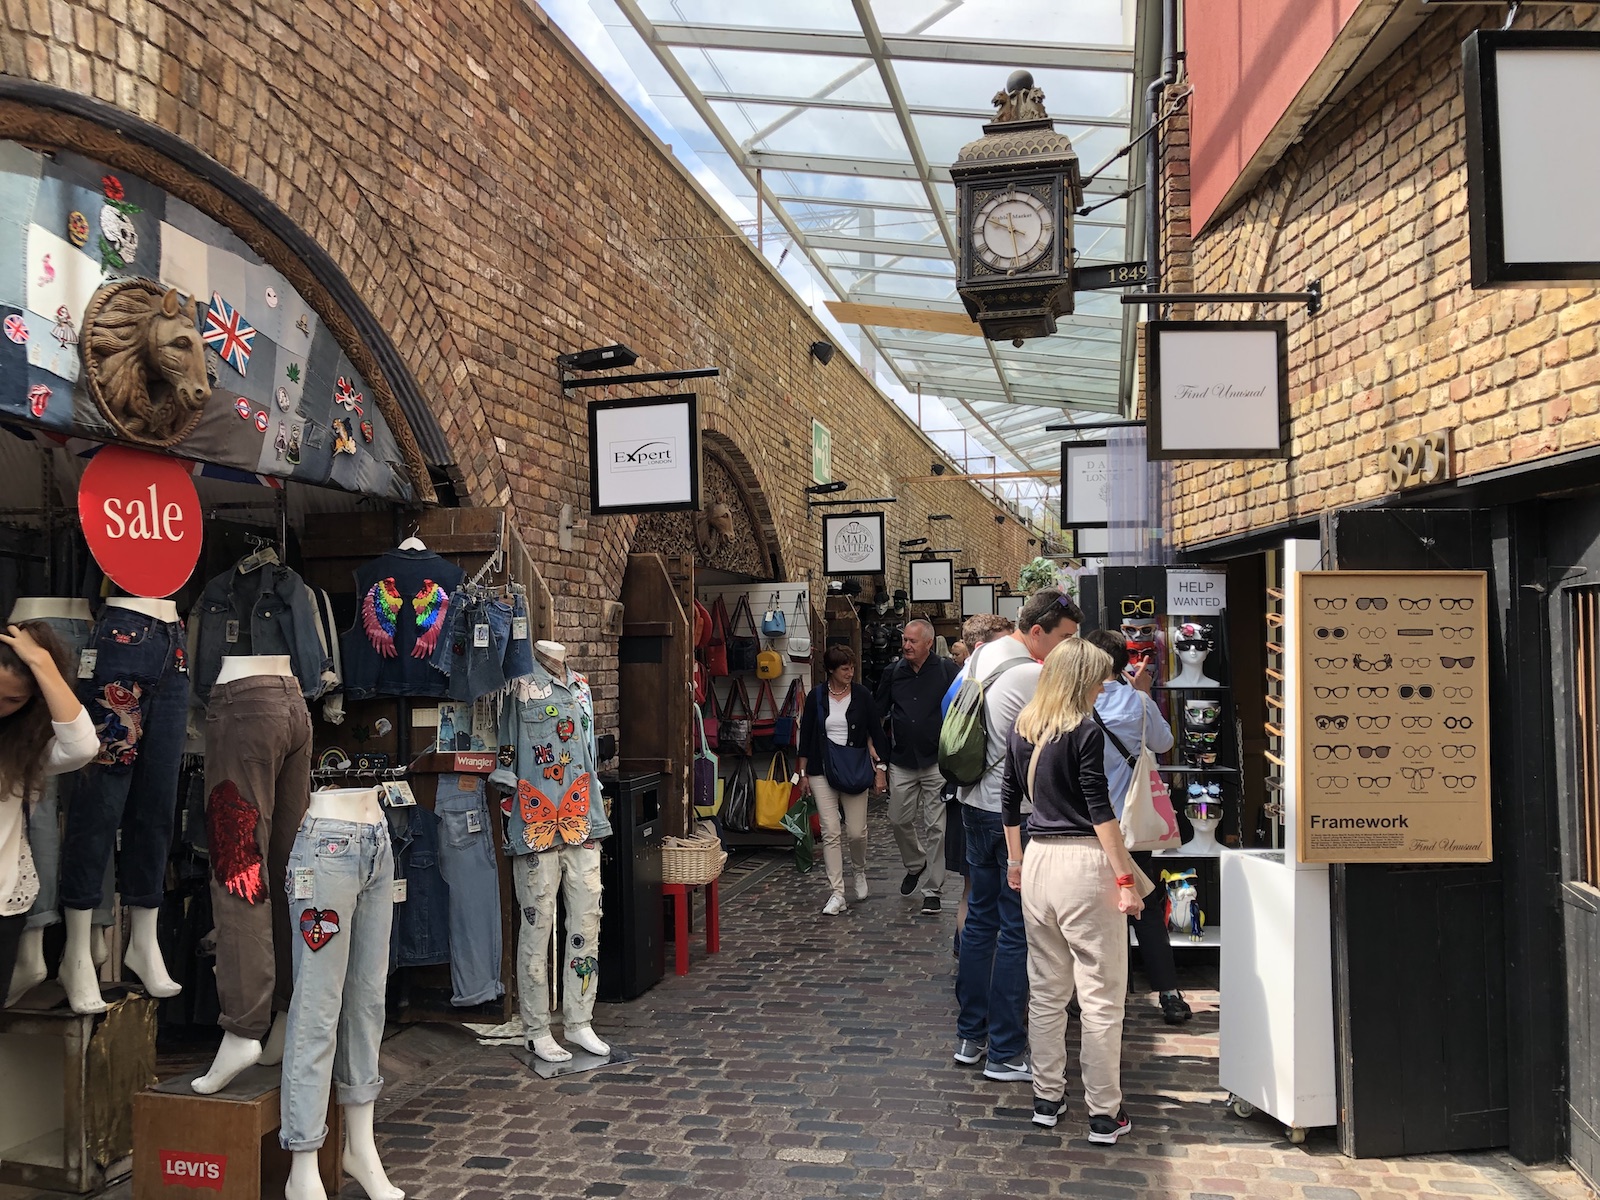 London Camden Market